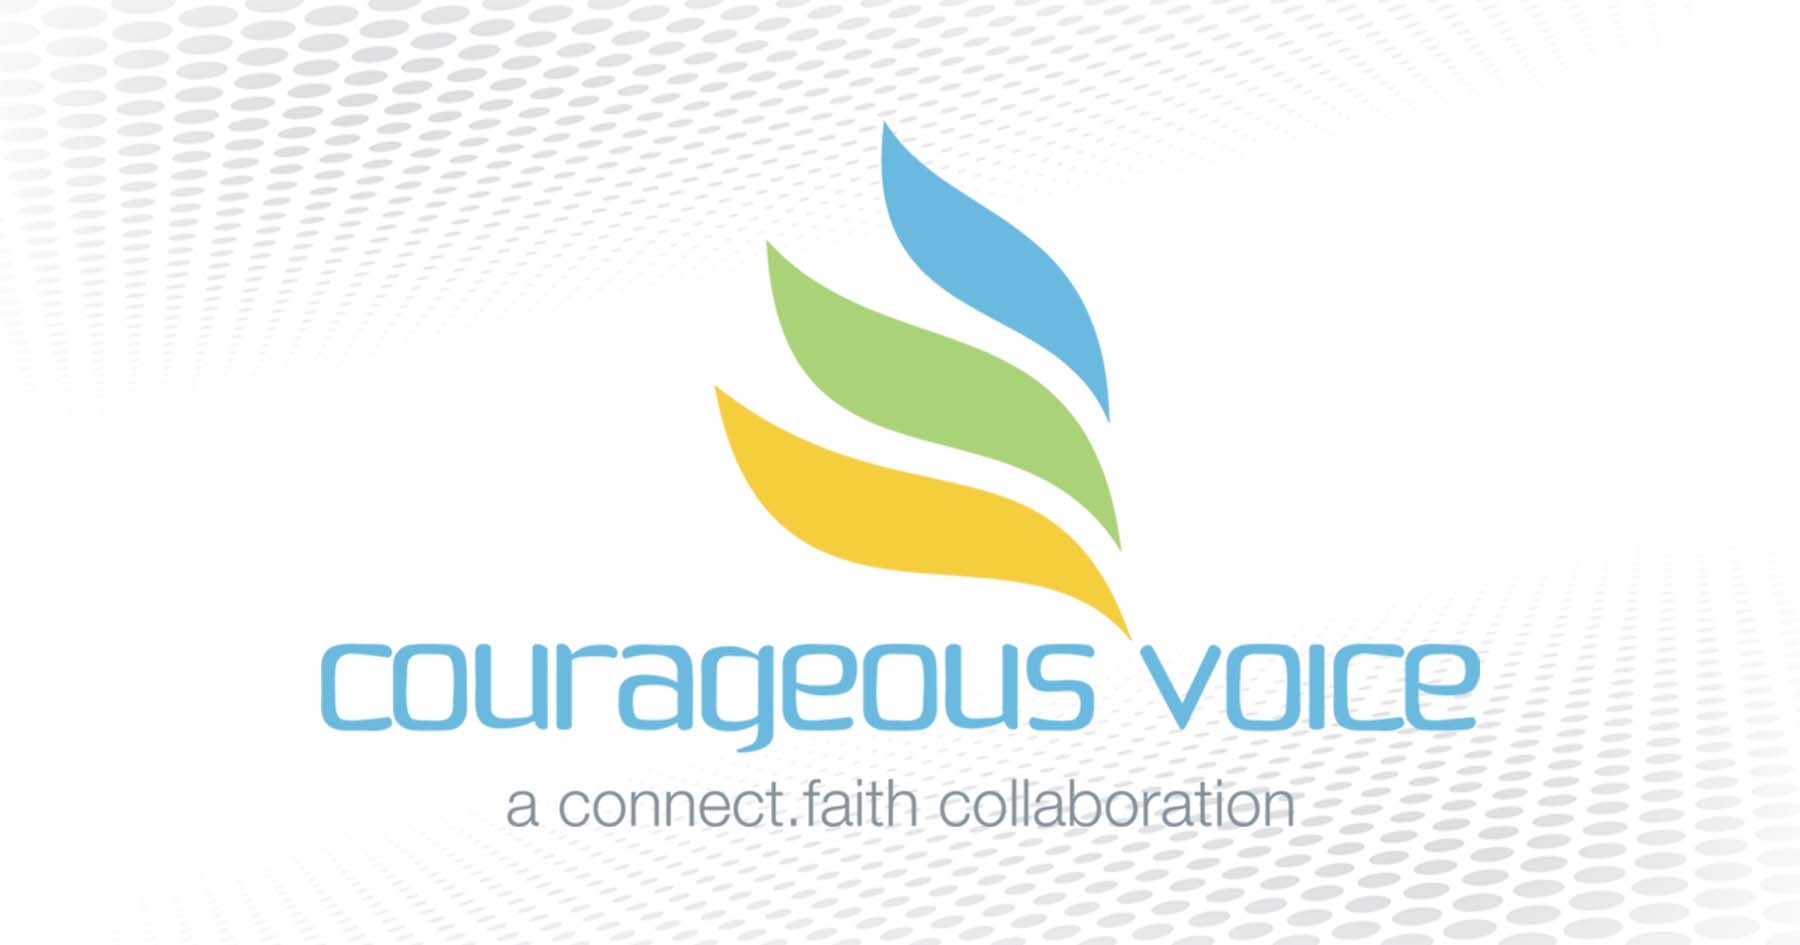 Hermon Mehari | “Courageous Voice” | connect.faith